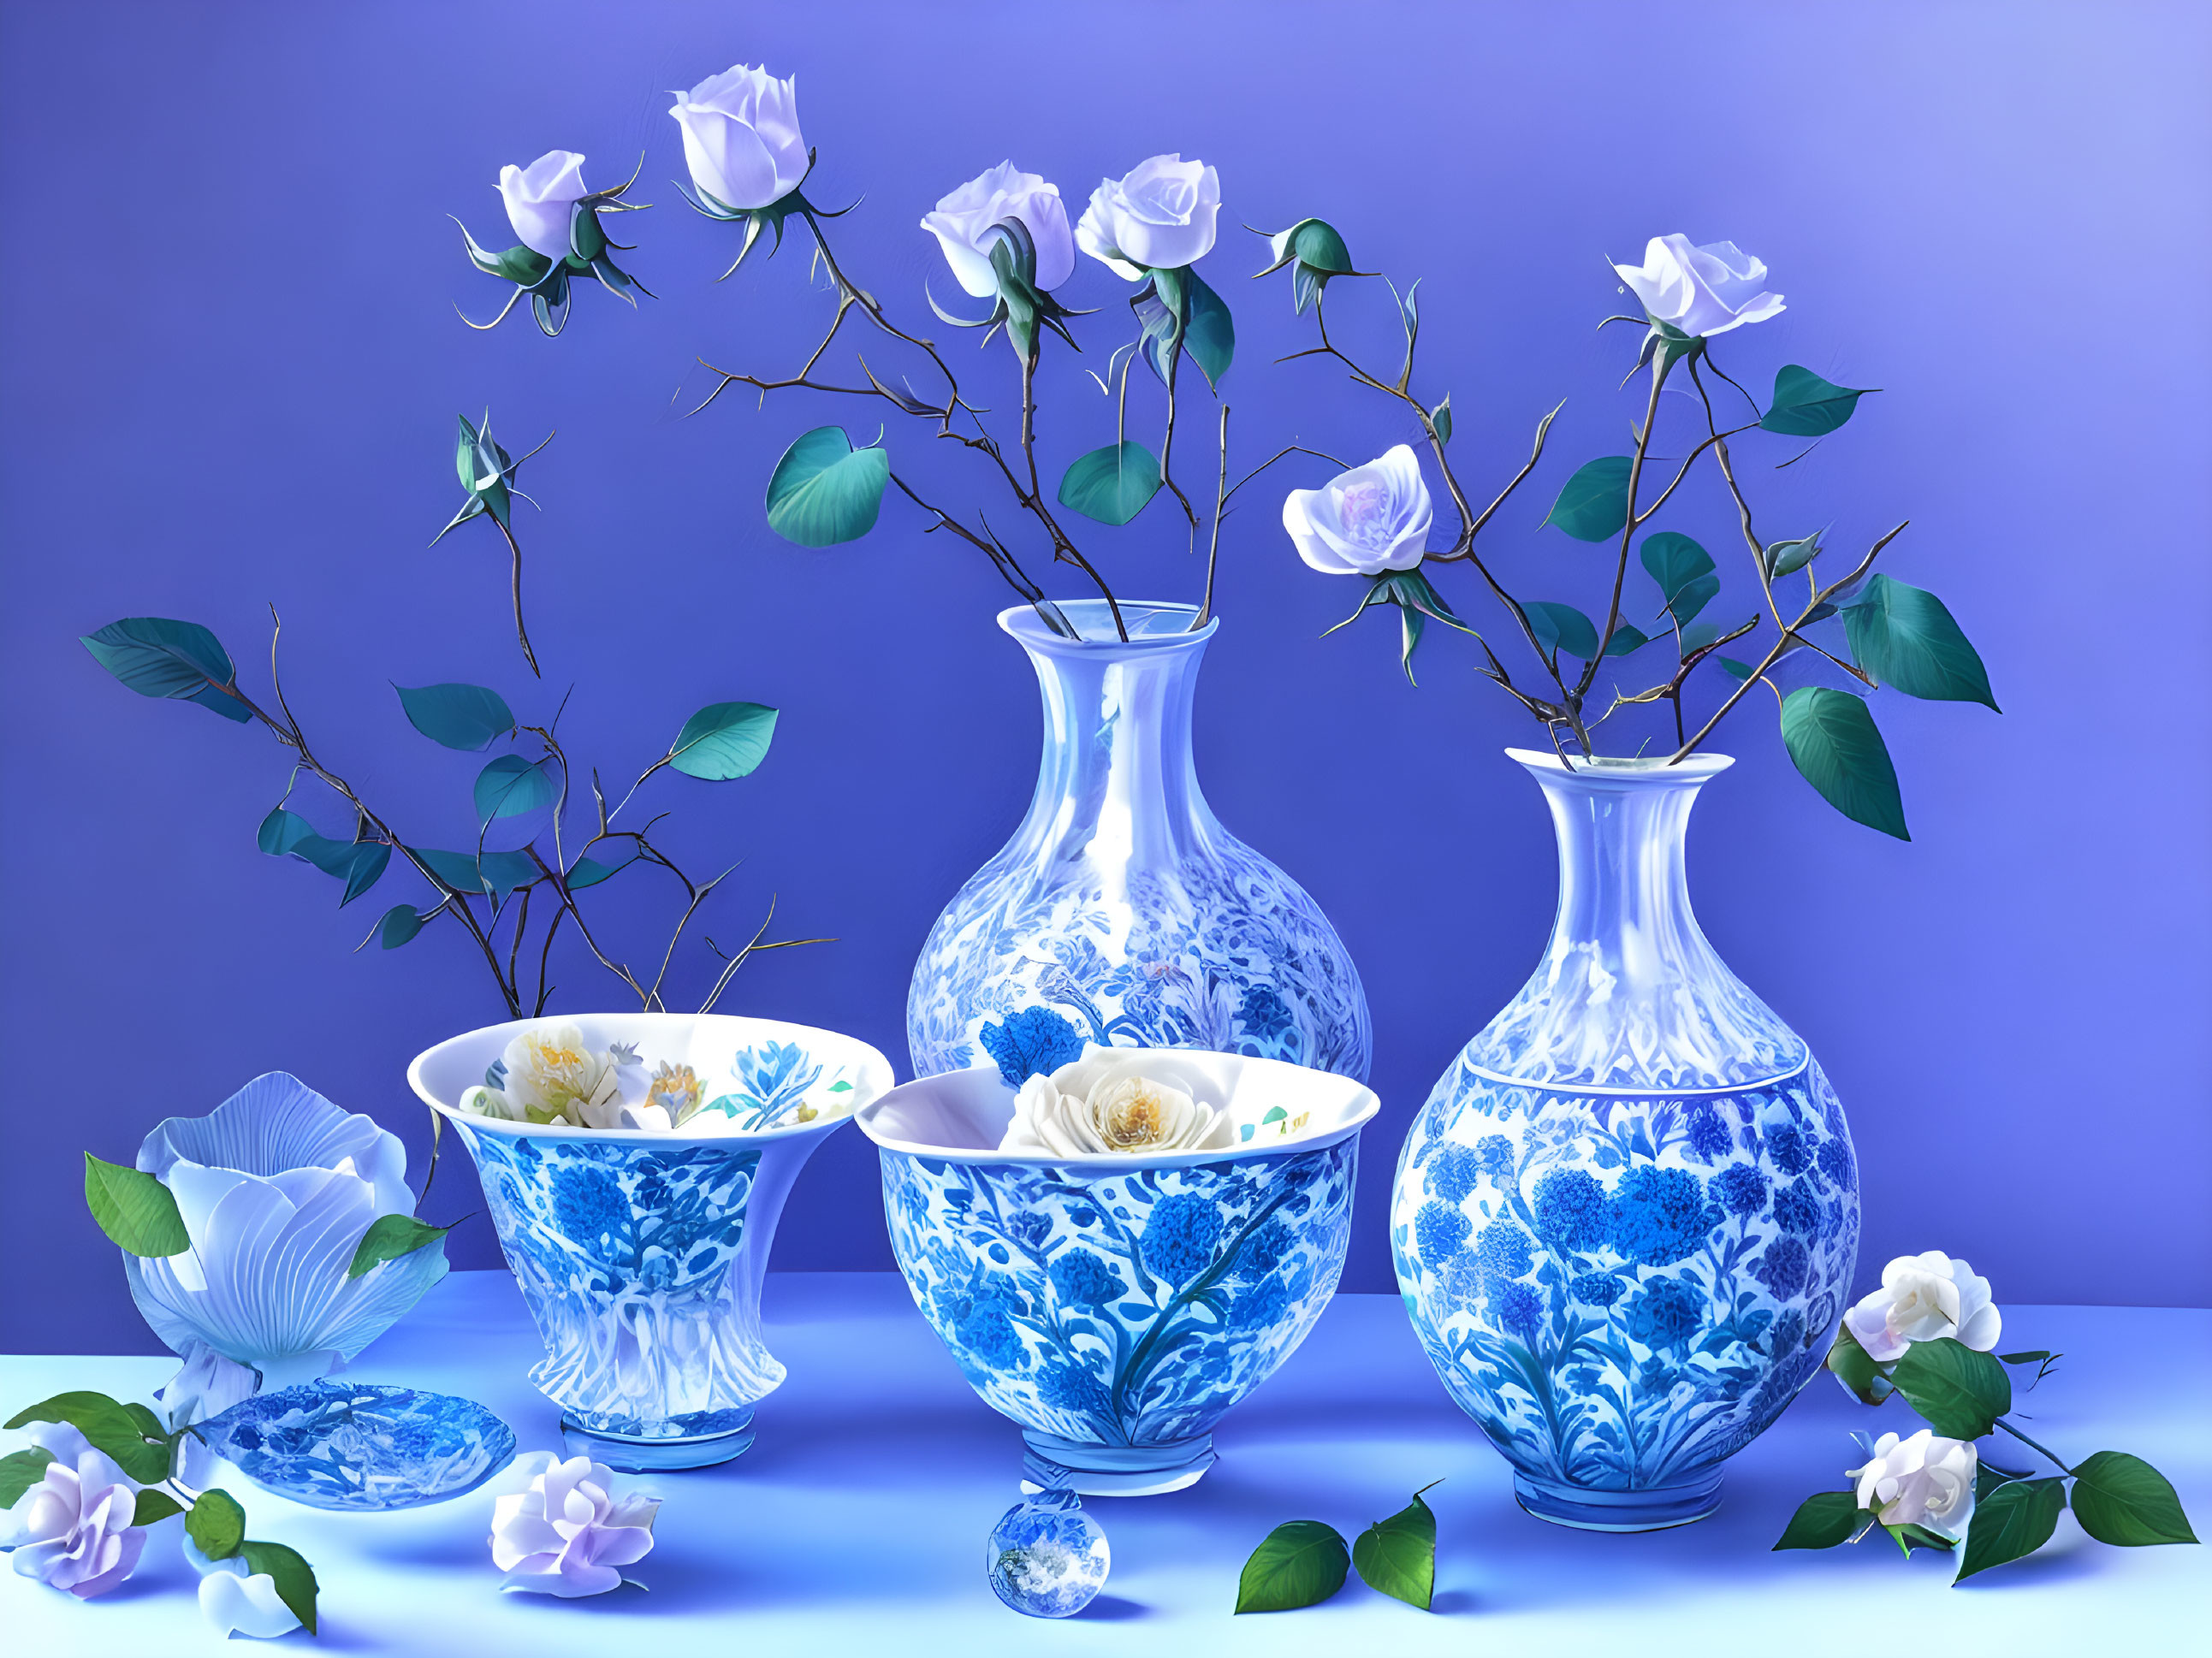 Graceful Porcelain Vases and Roses